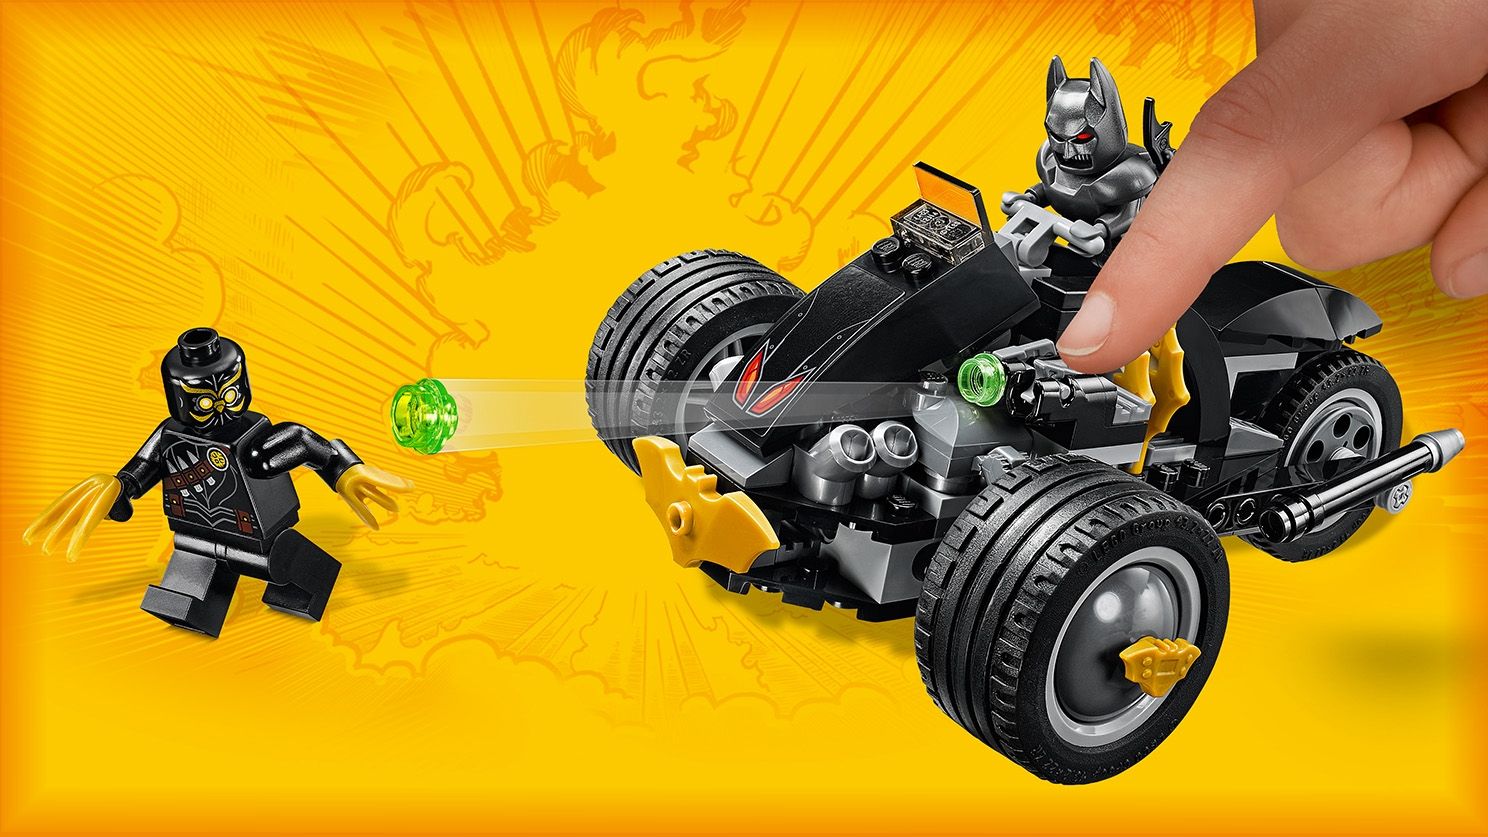 LEGO Super Heroes 76110 Batman™: Attacke der Talons LEGO_76110_WEB_SEC05_1488.jpg